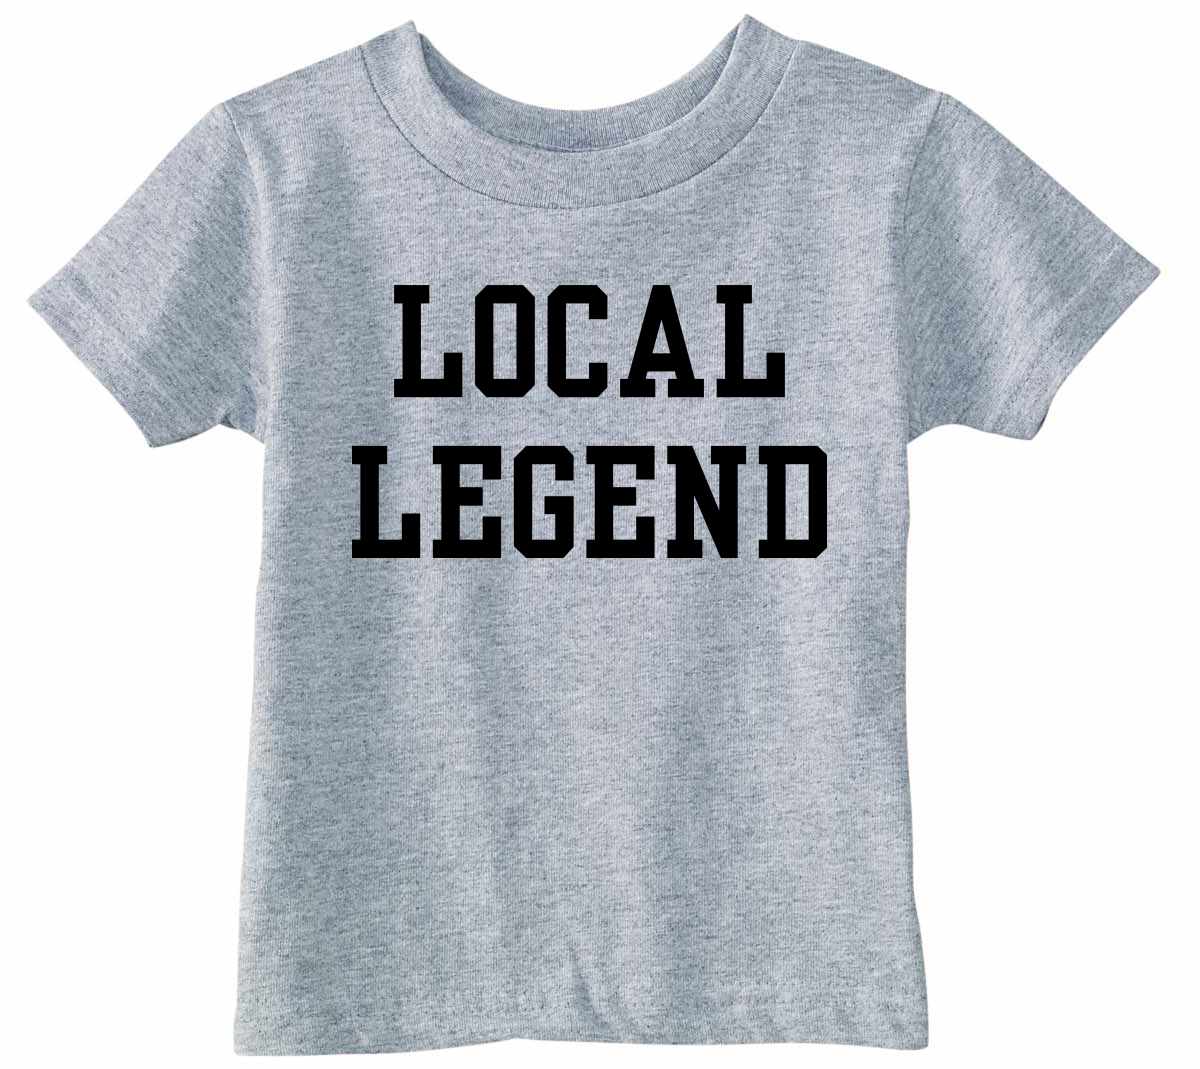 Local Legend on Infant-Toddler T-Shirt (#1310-7)